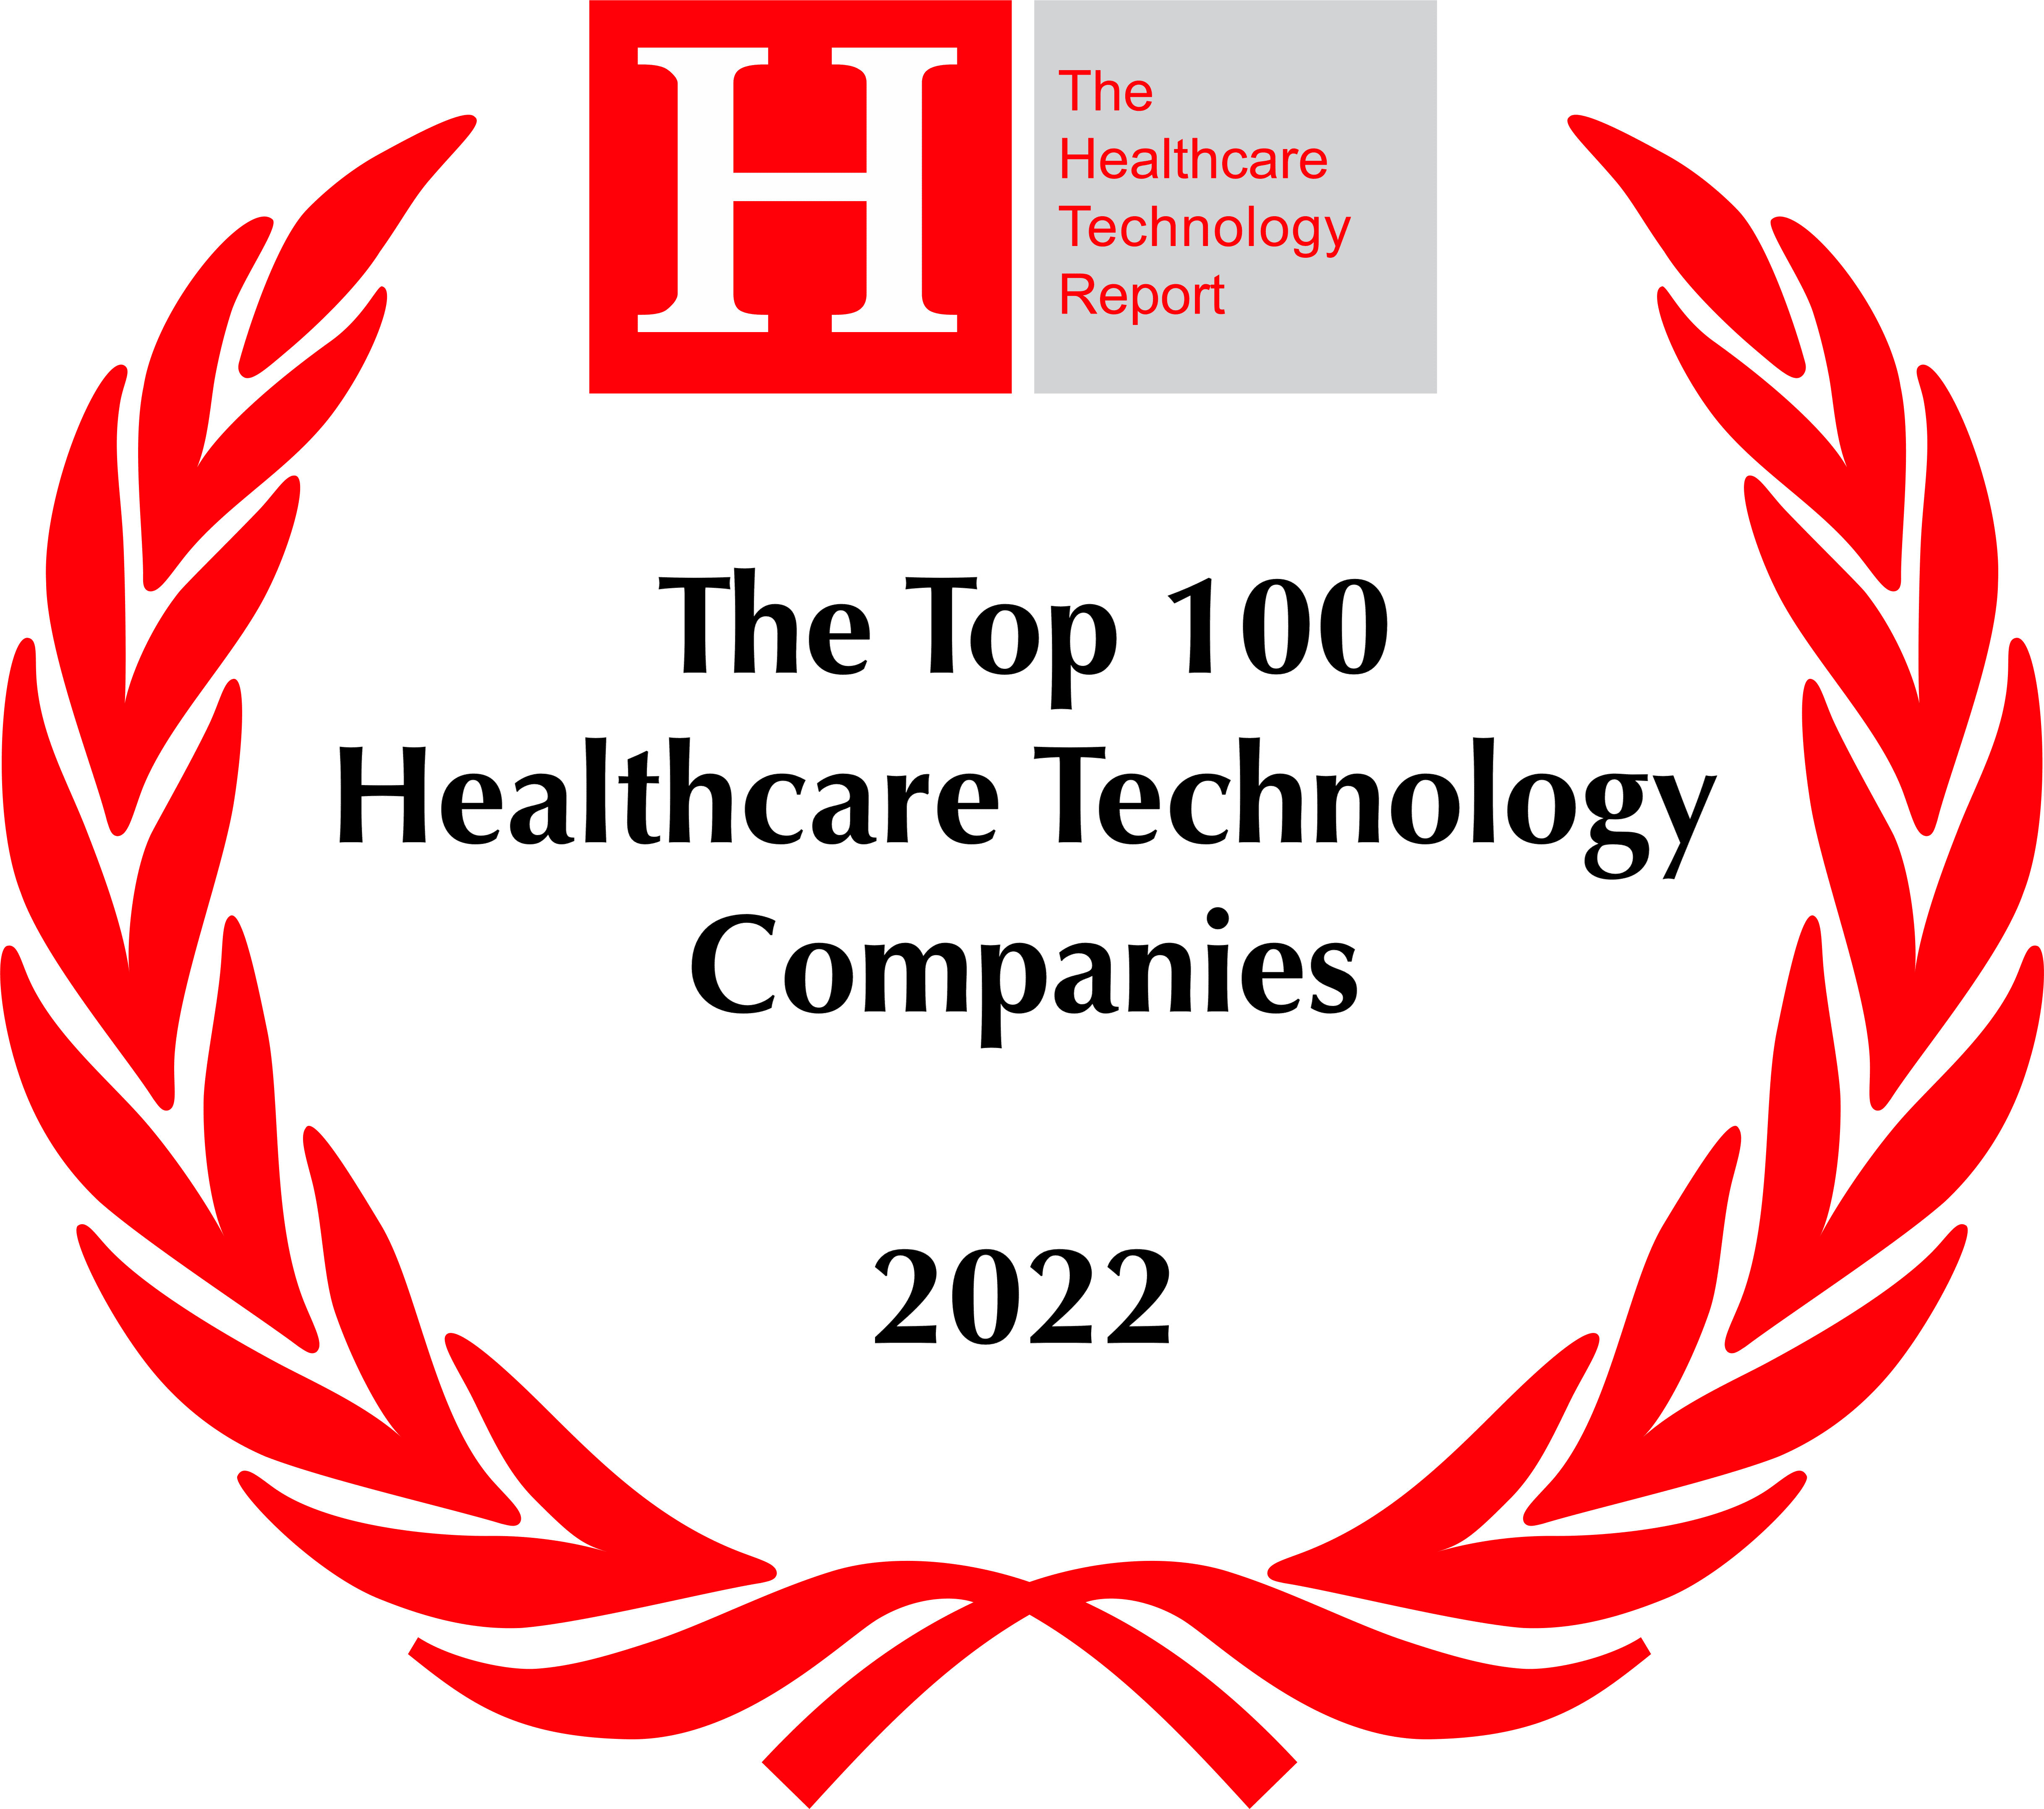 Top 100 Healthcare Technology Companies 2022 award